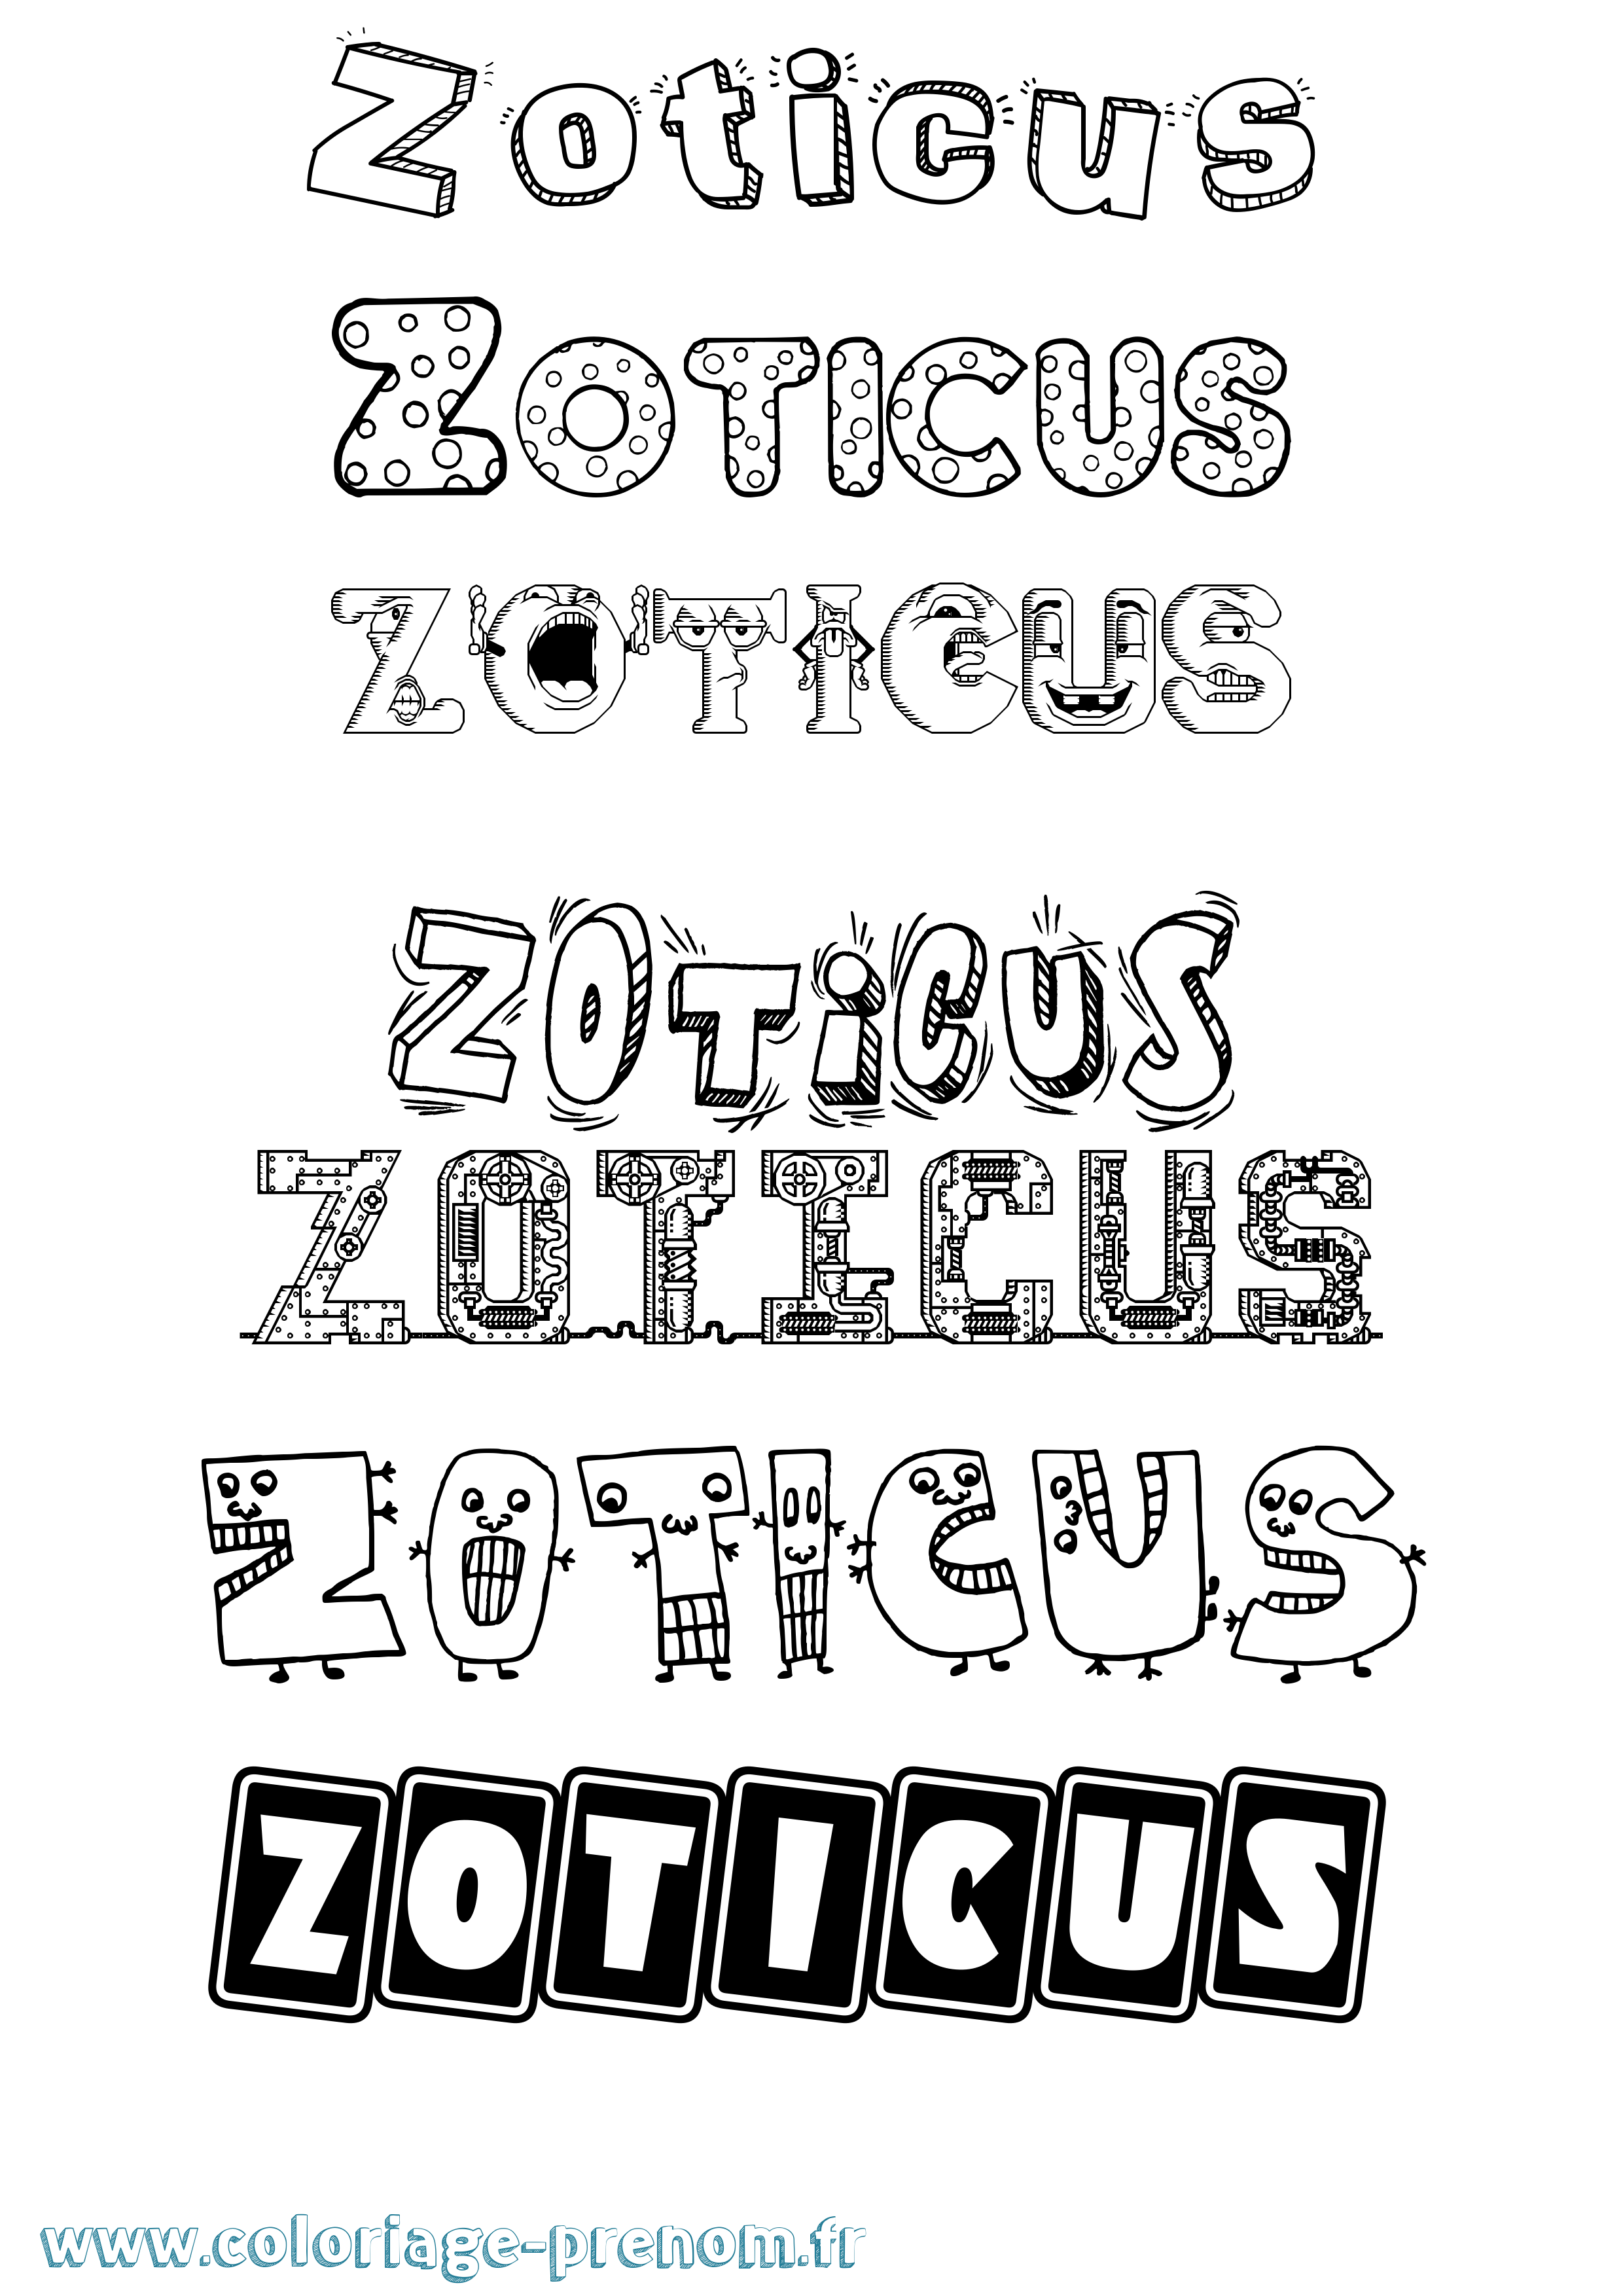 Coloriage prénom Zoticus Fun